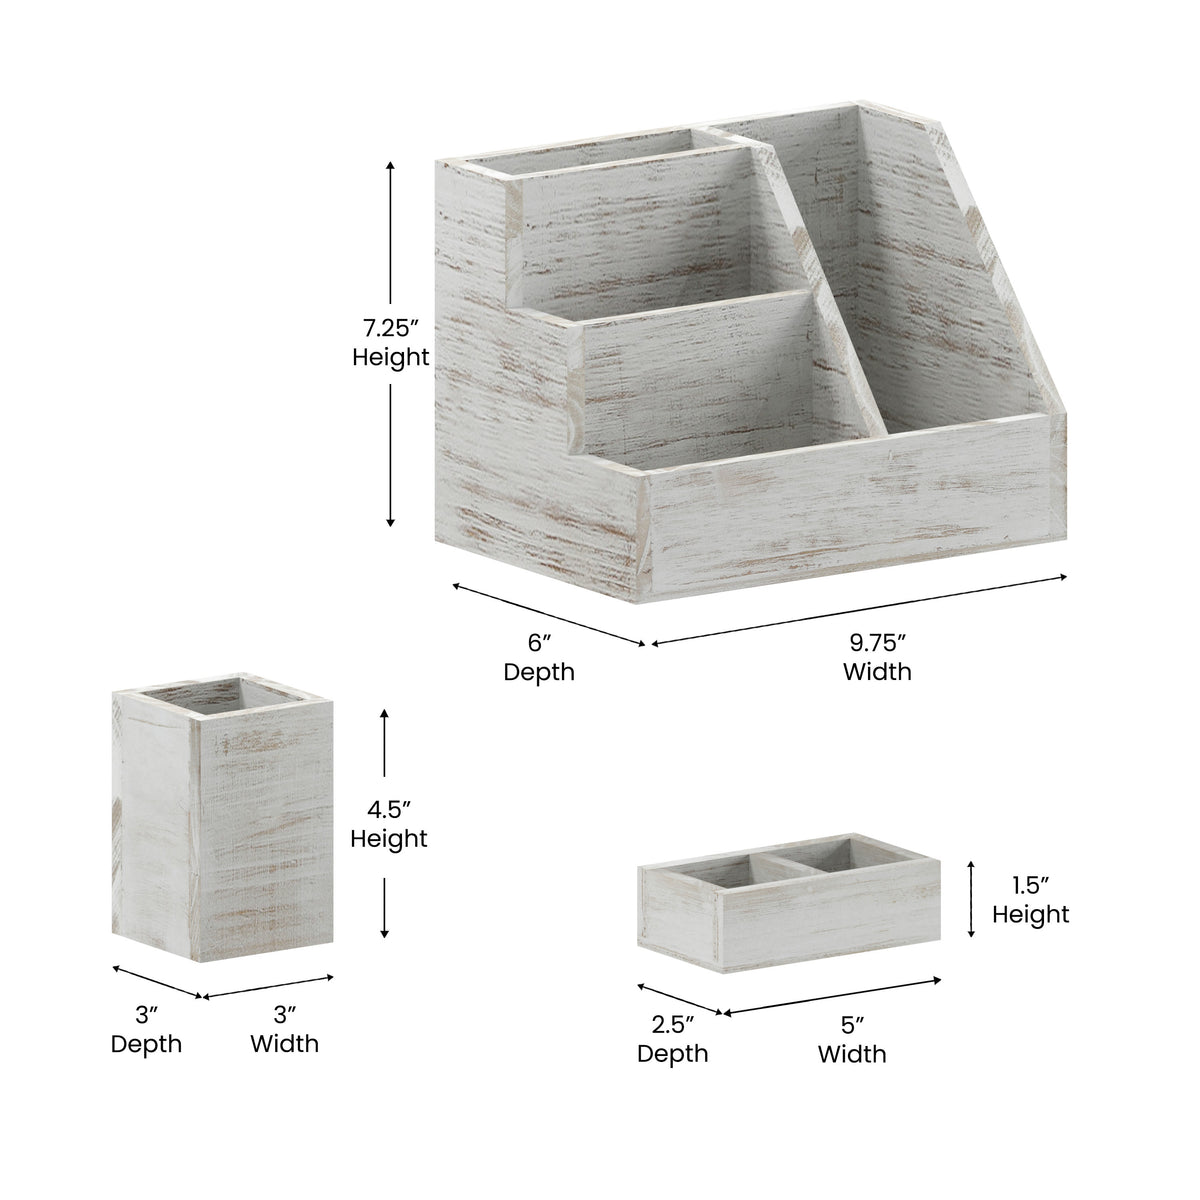 White Wash |#| Whitewashed Wooden 3 Piece Organization Set for Desktop, Tables, or Vanity